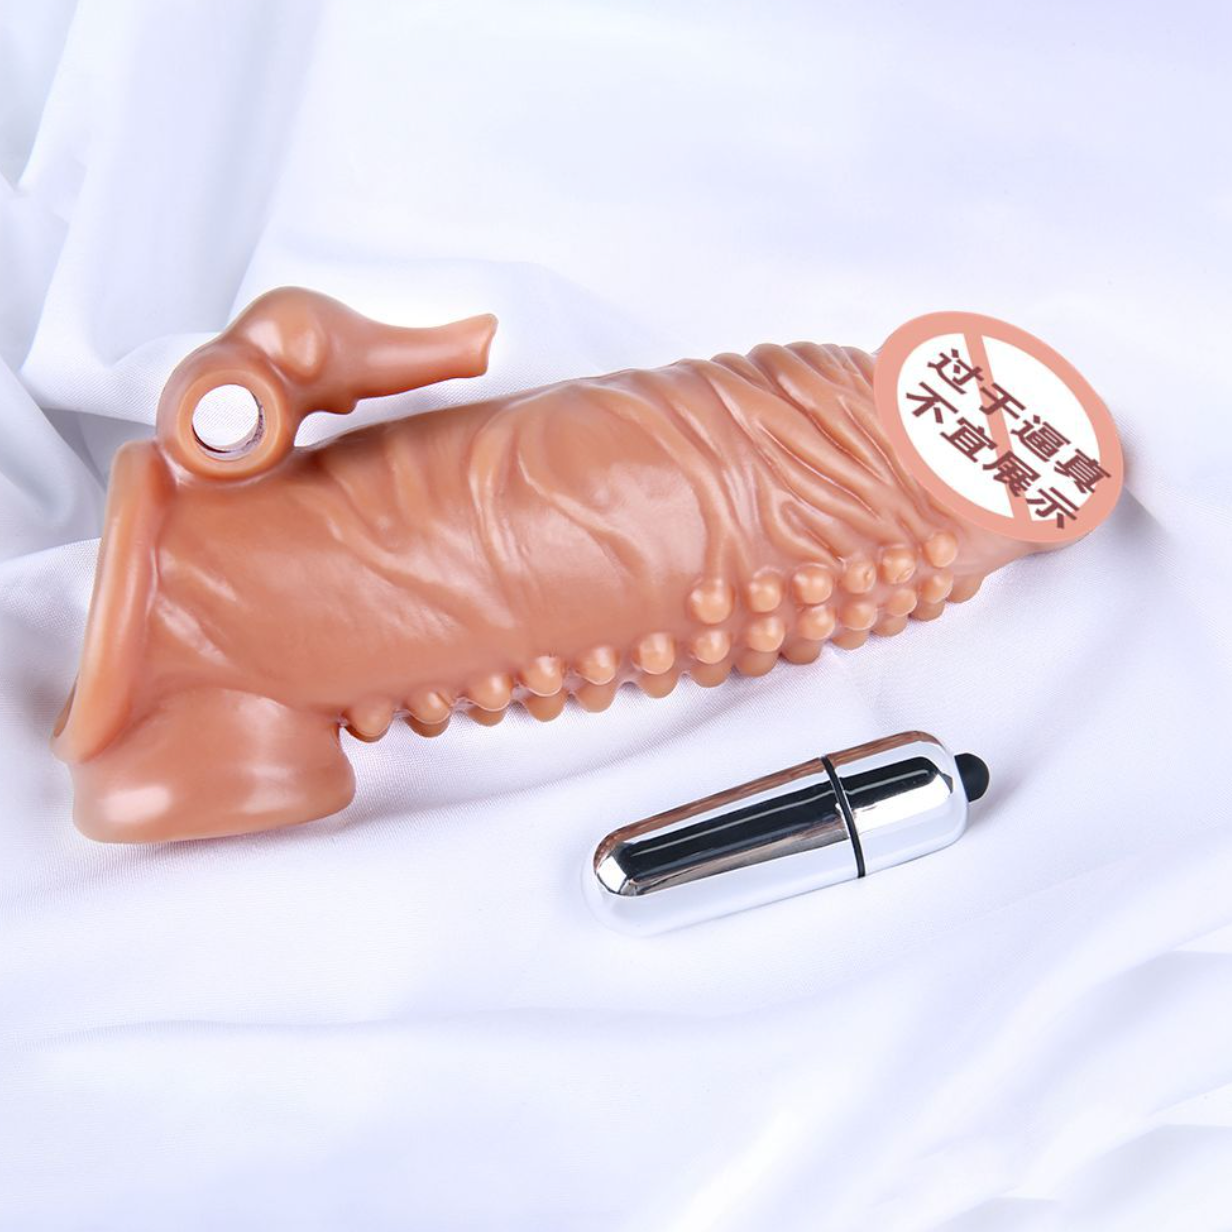 Skin penis extension cock ring [With Vibrator] v2 男用加长加粗肉色锁精震动 v2 1568